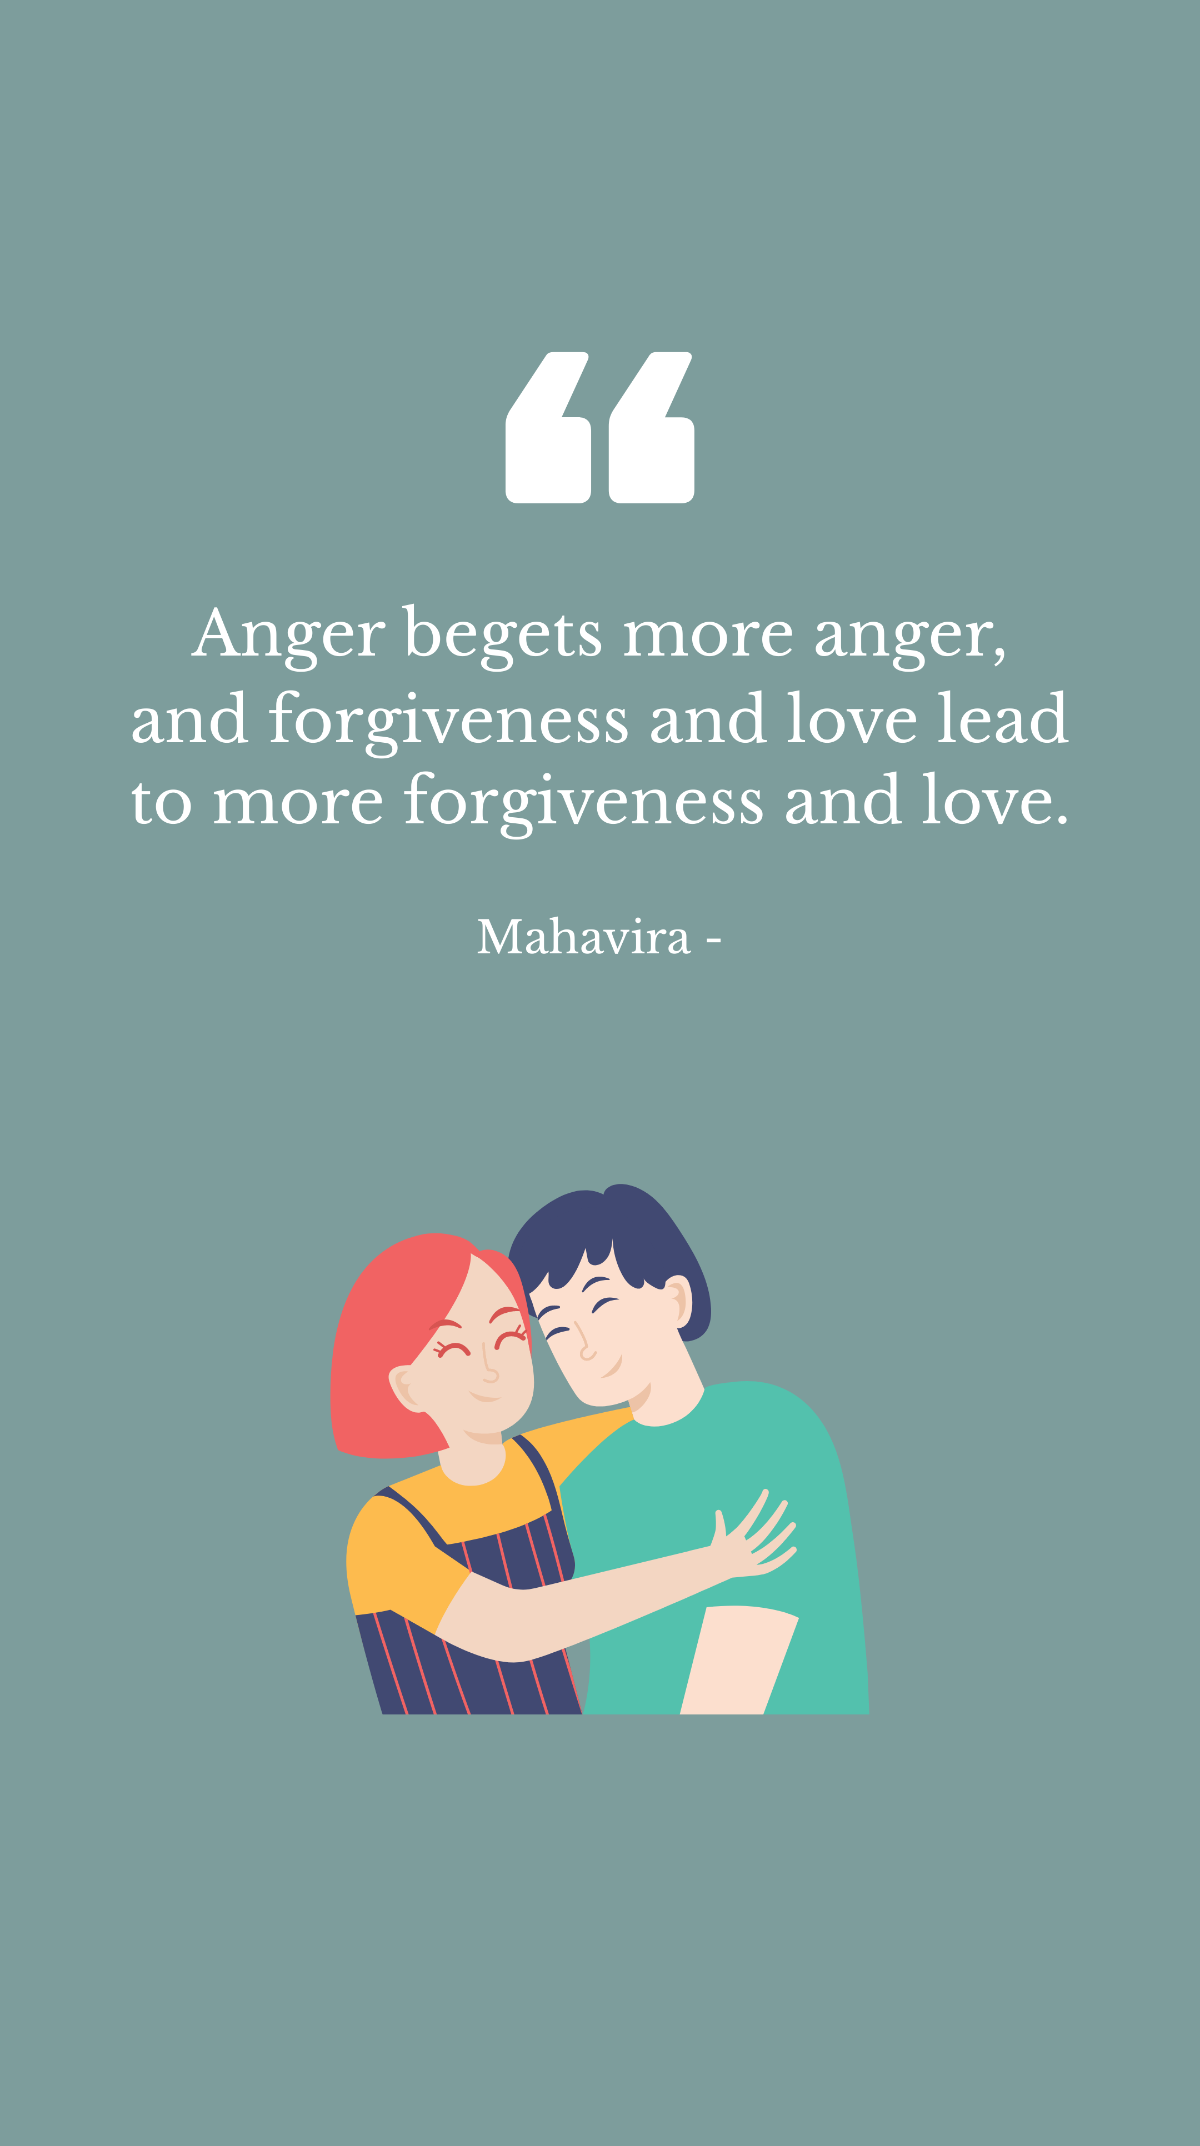 Mahavira - Anger begets more anger, and forgiveness and love lead to more forgiveness and love.